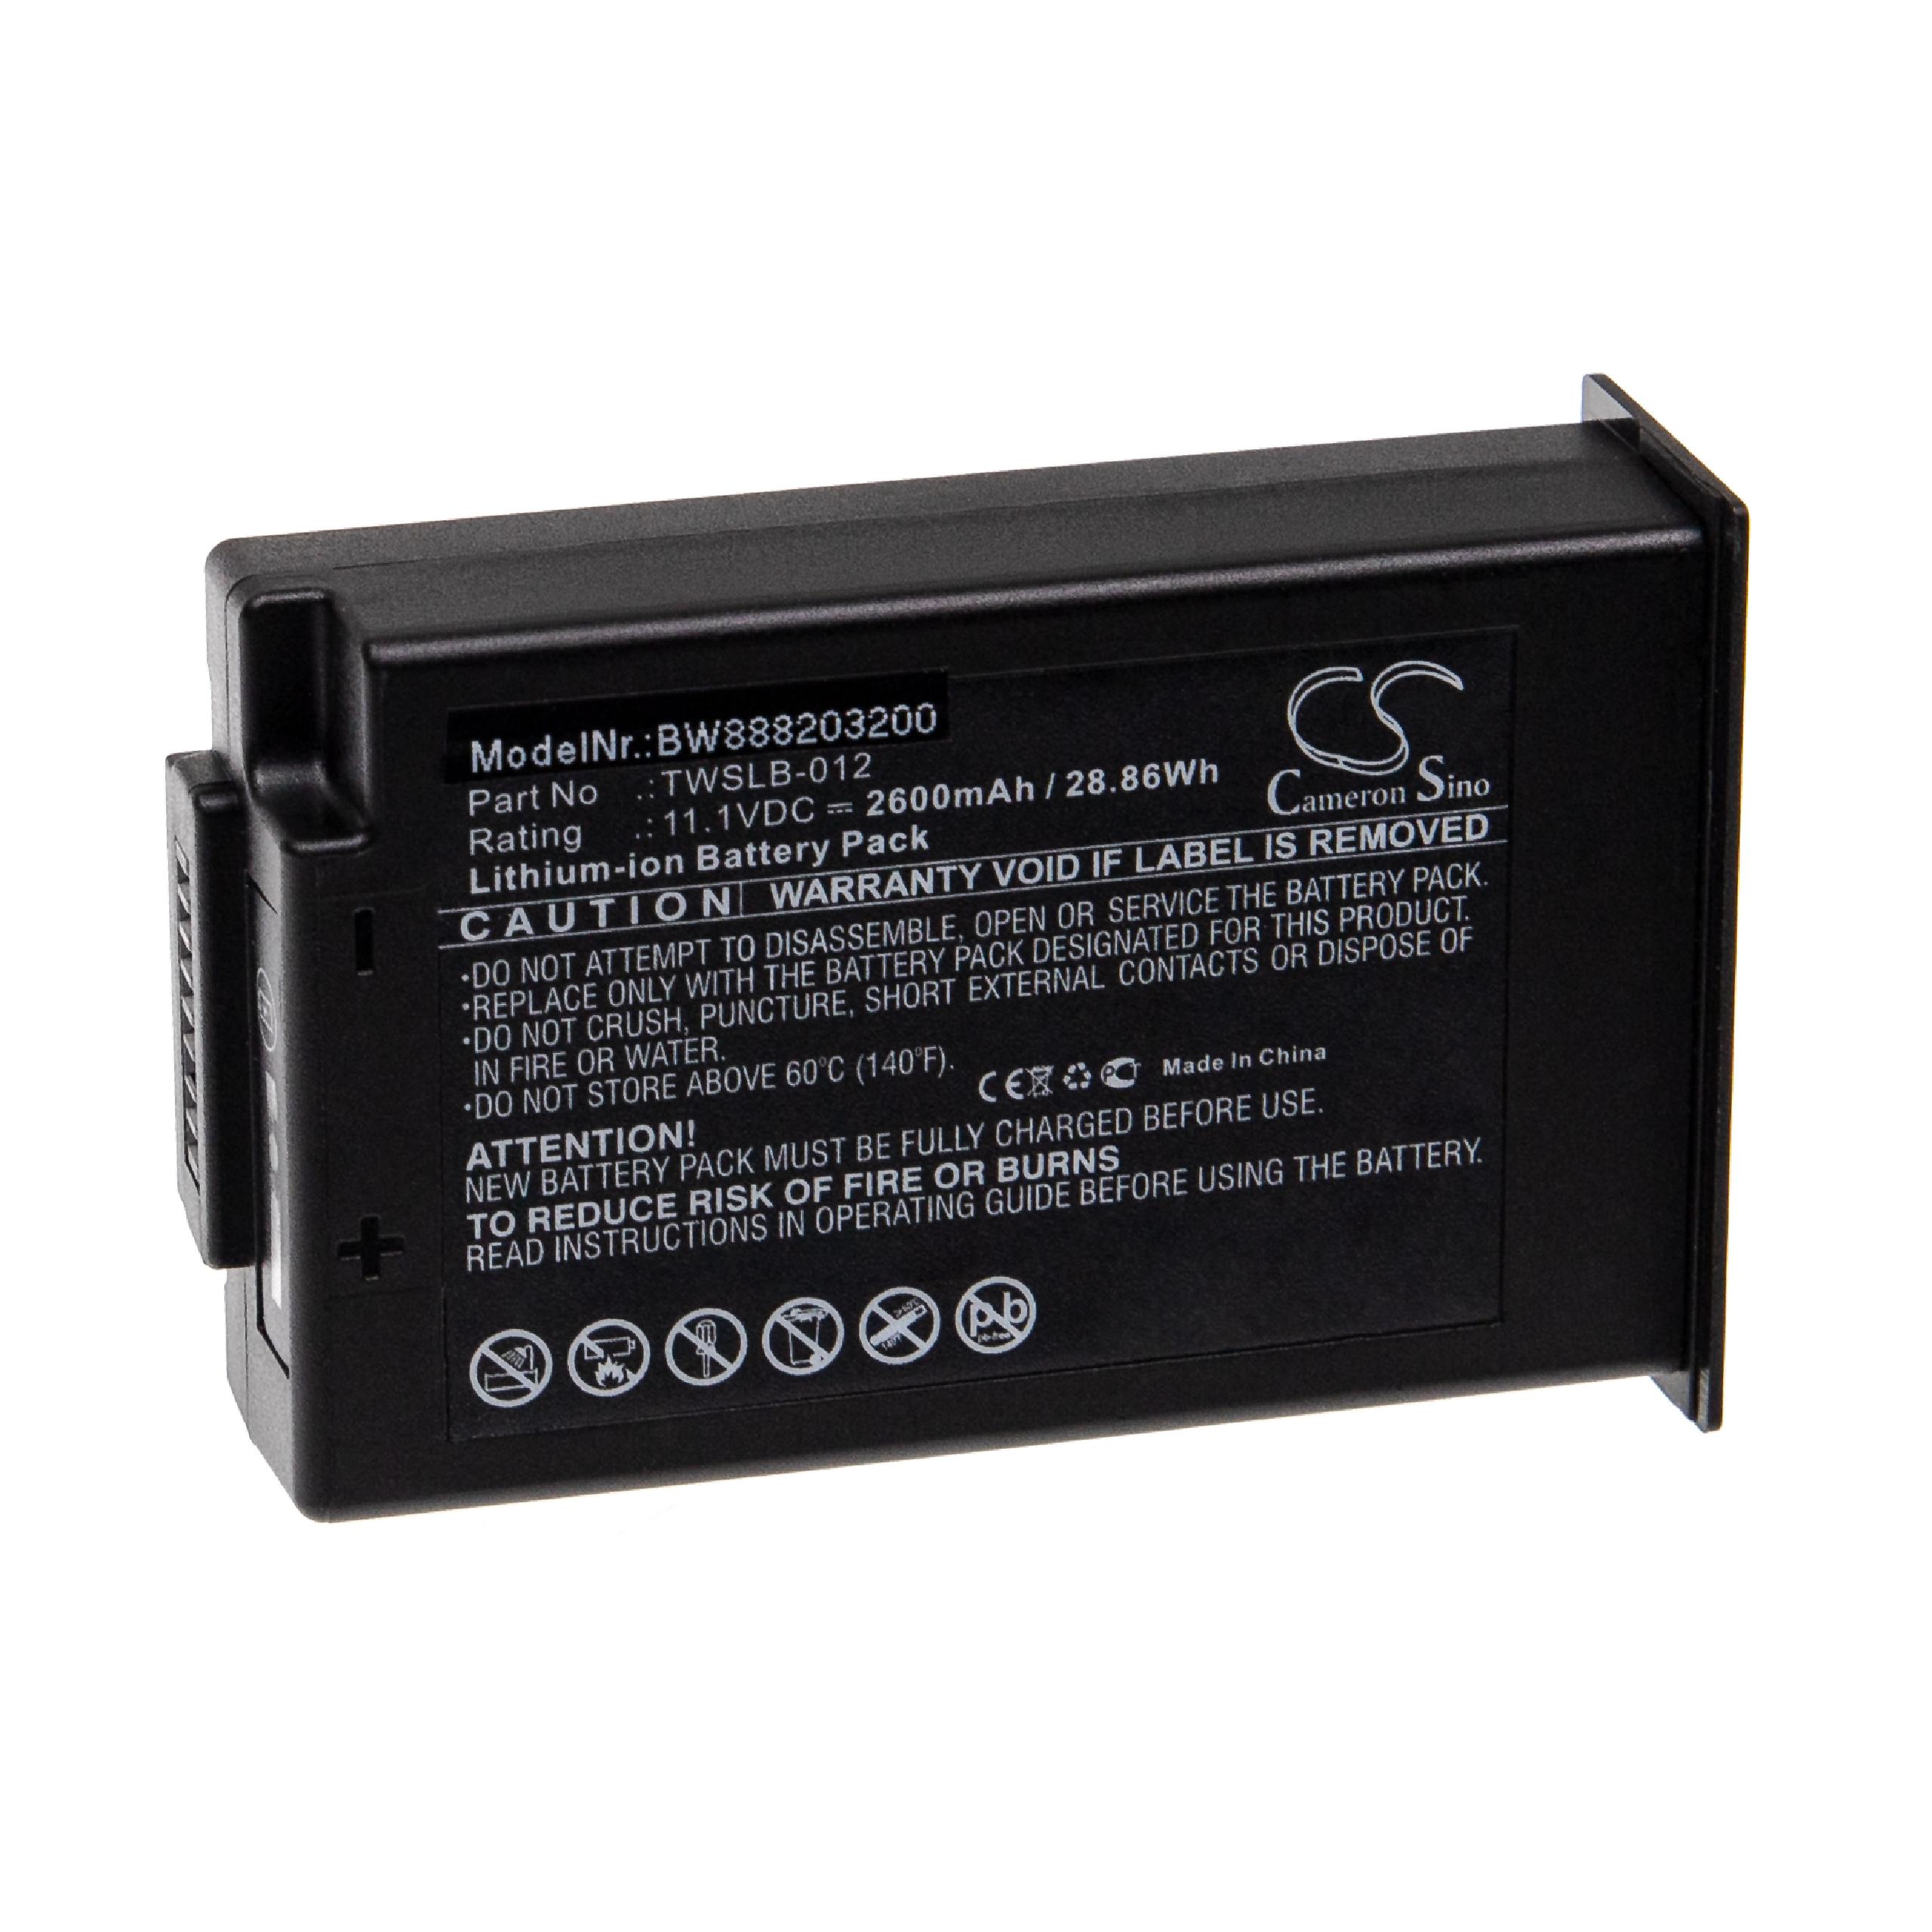 Akumulator zamiennik Edan TWSLB-012 - 2600 mAh 11,1 V Li-Ion